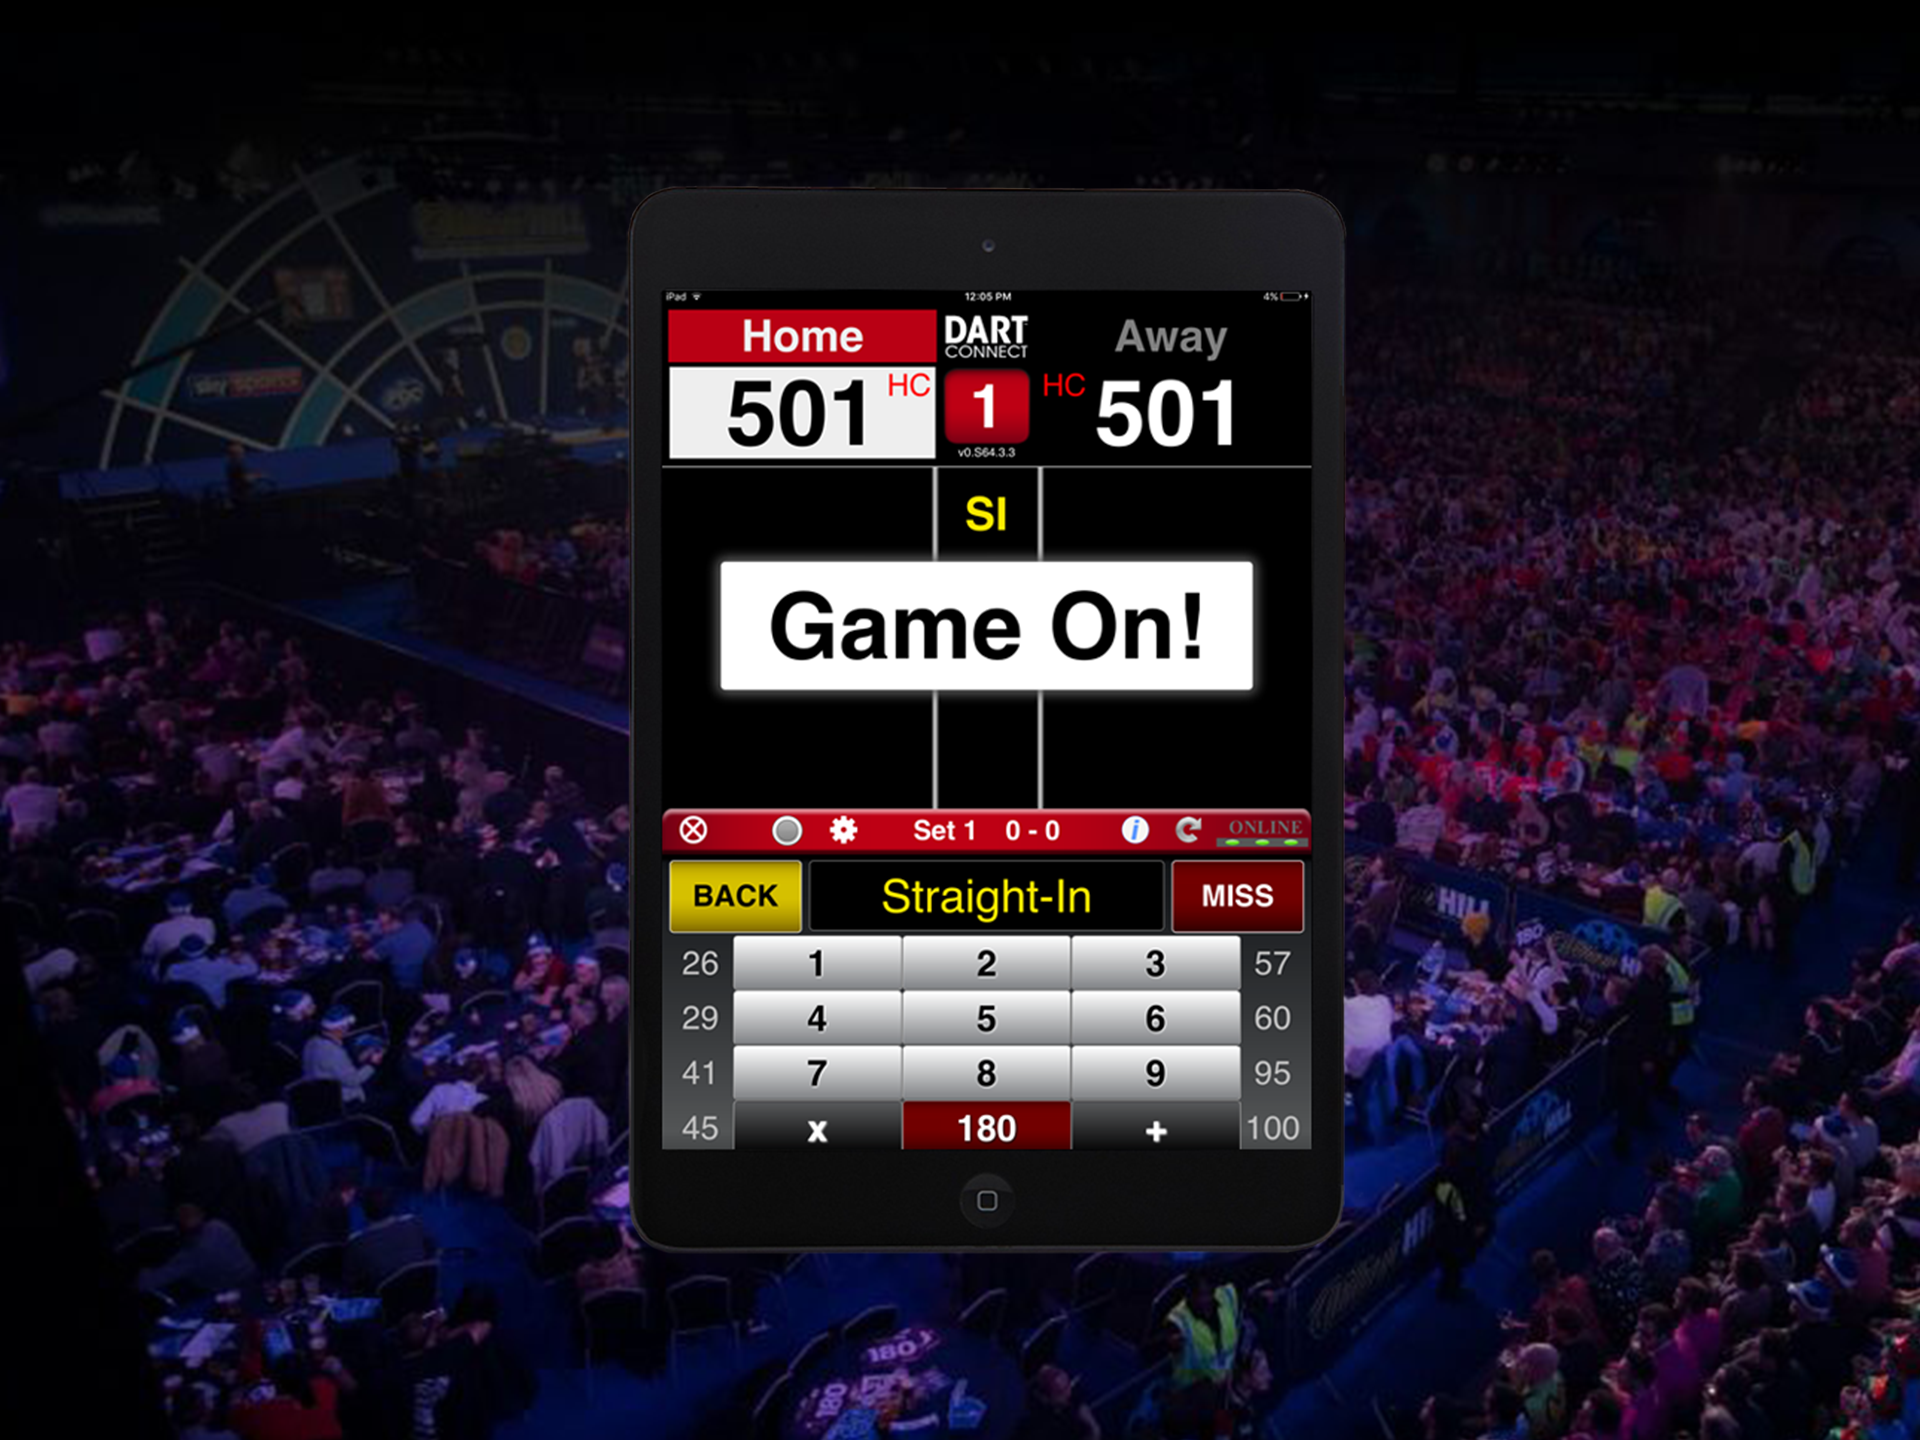 Darts scoreboard to illustrate a 501 game